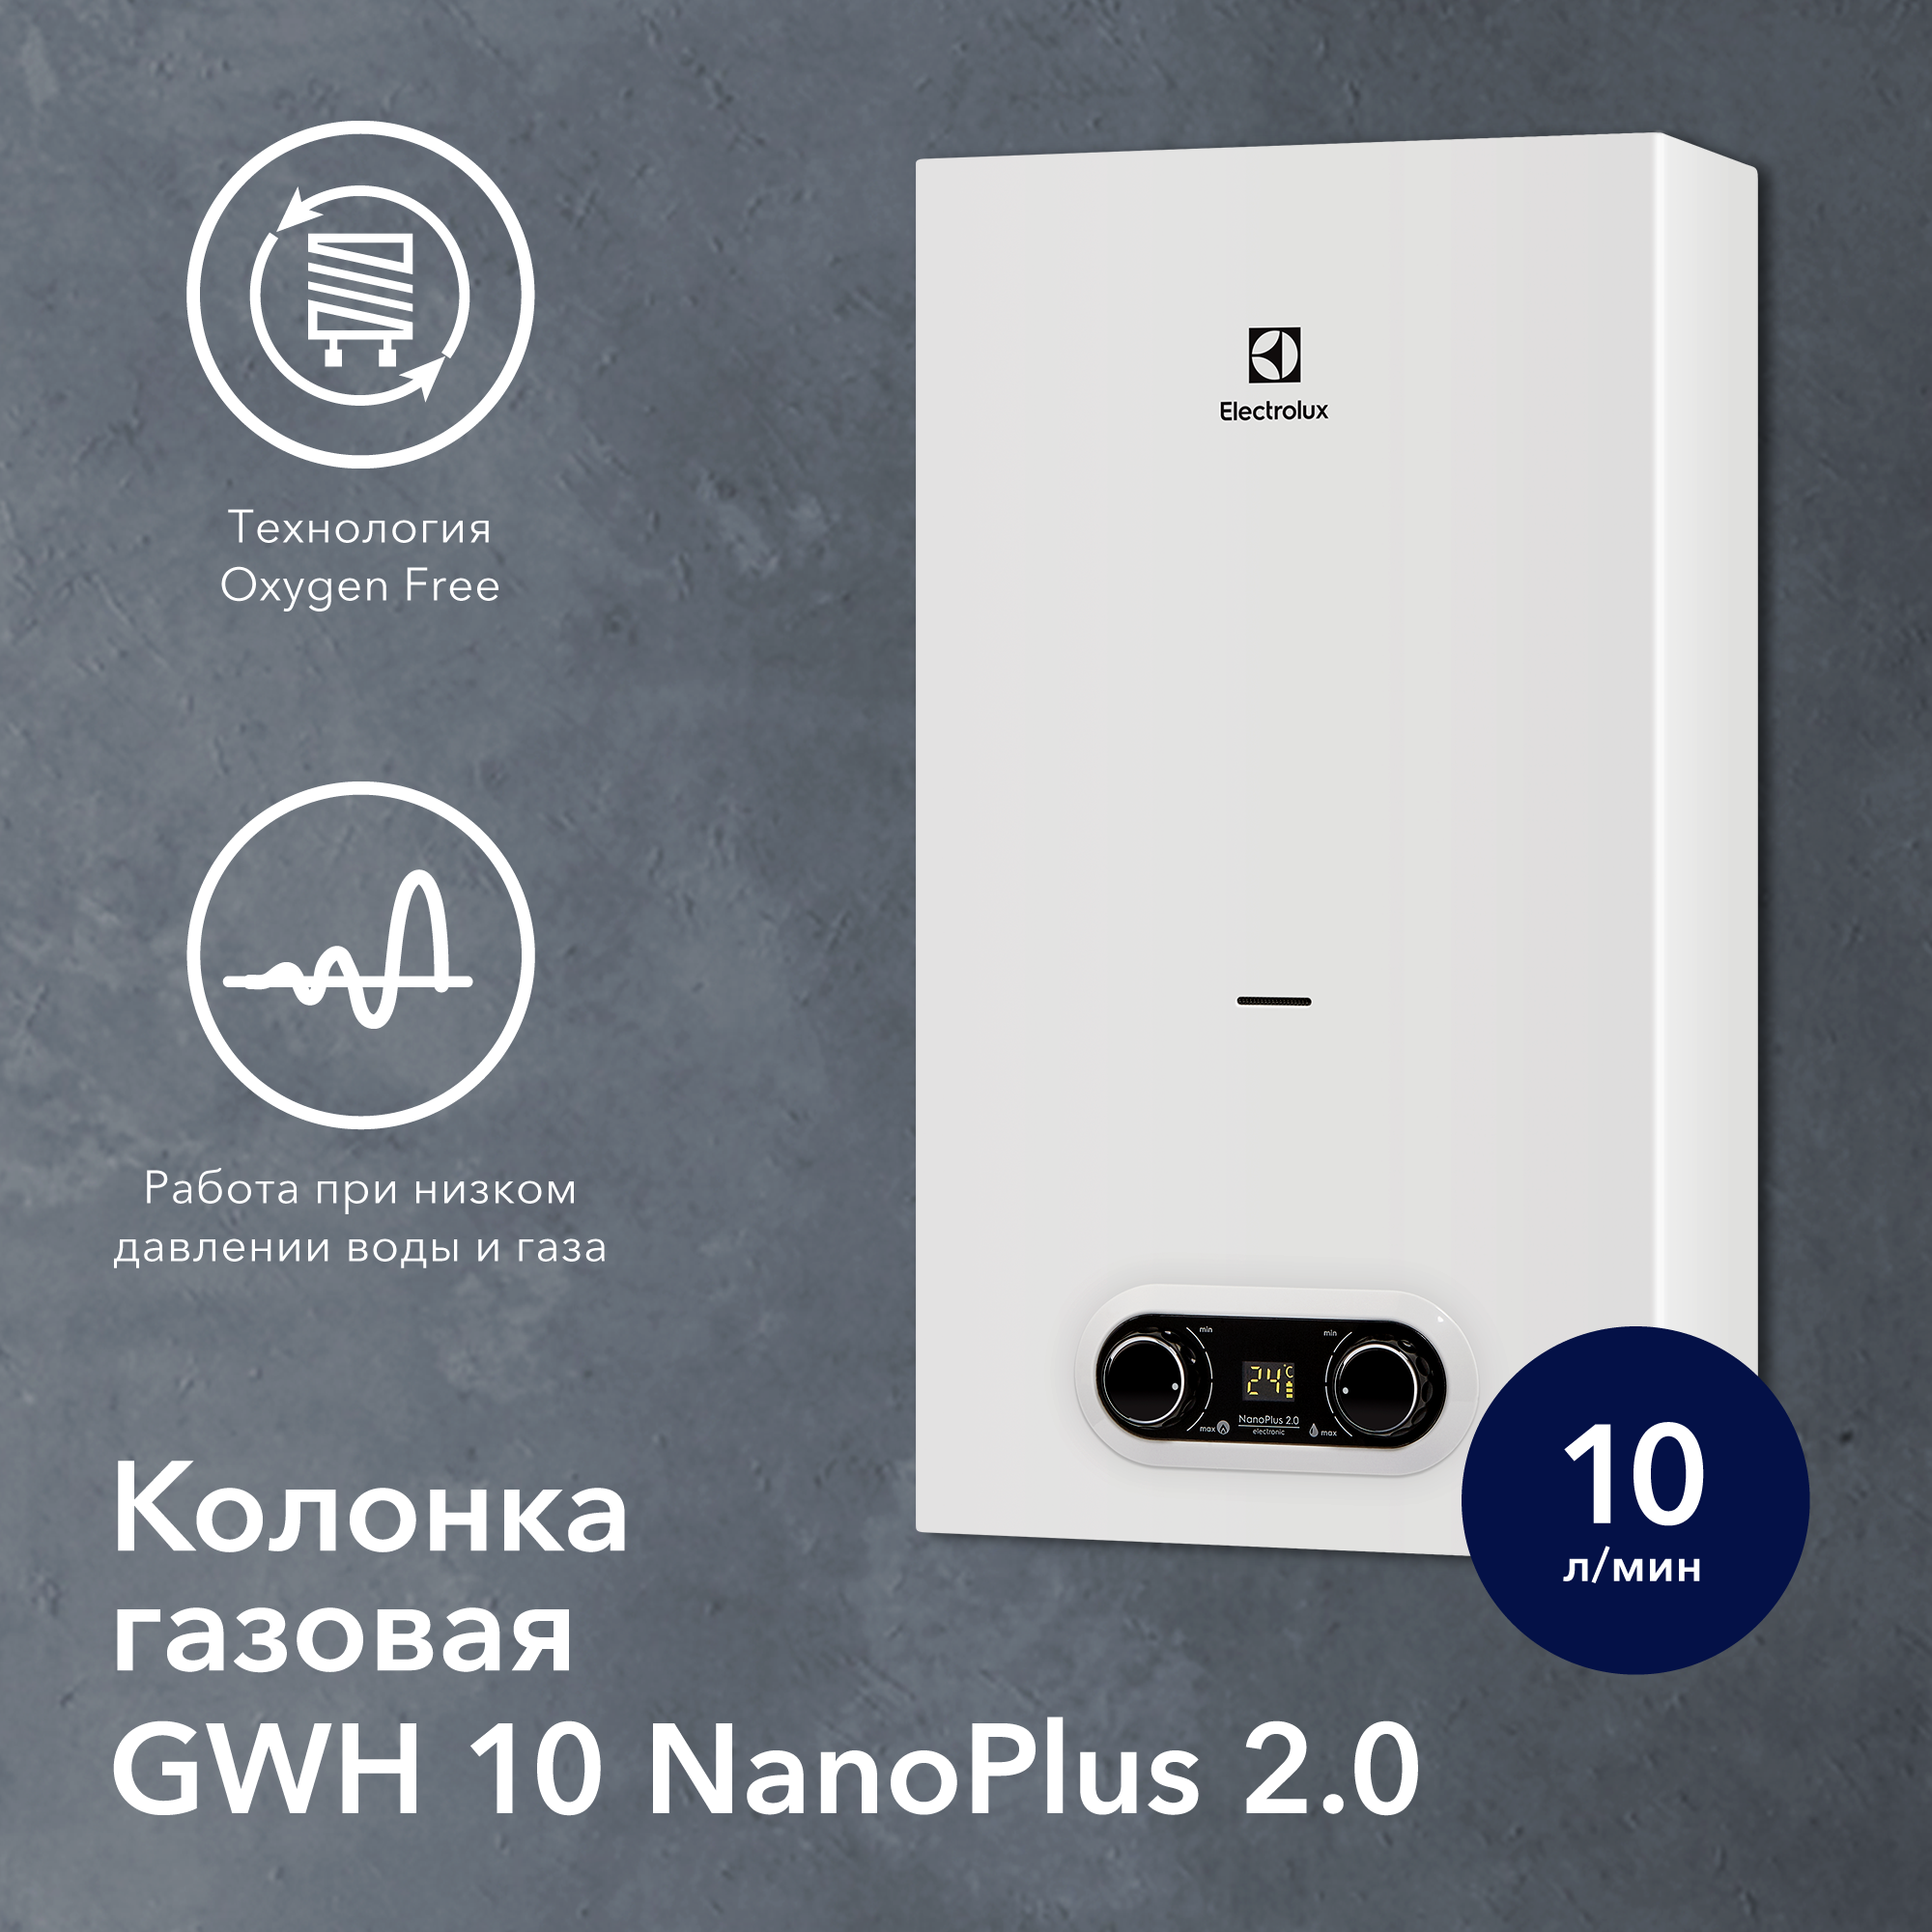 Колонка газовая Electrolux GWH 10 NanoPlus 2.0